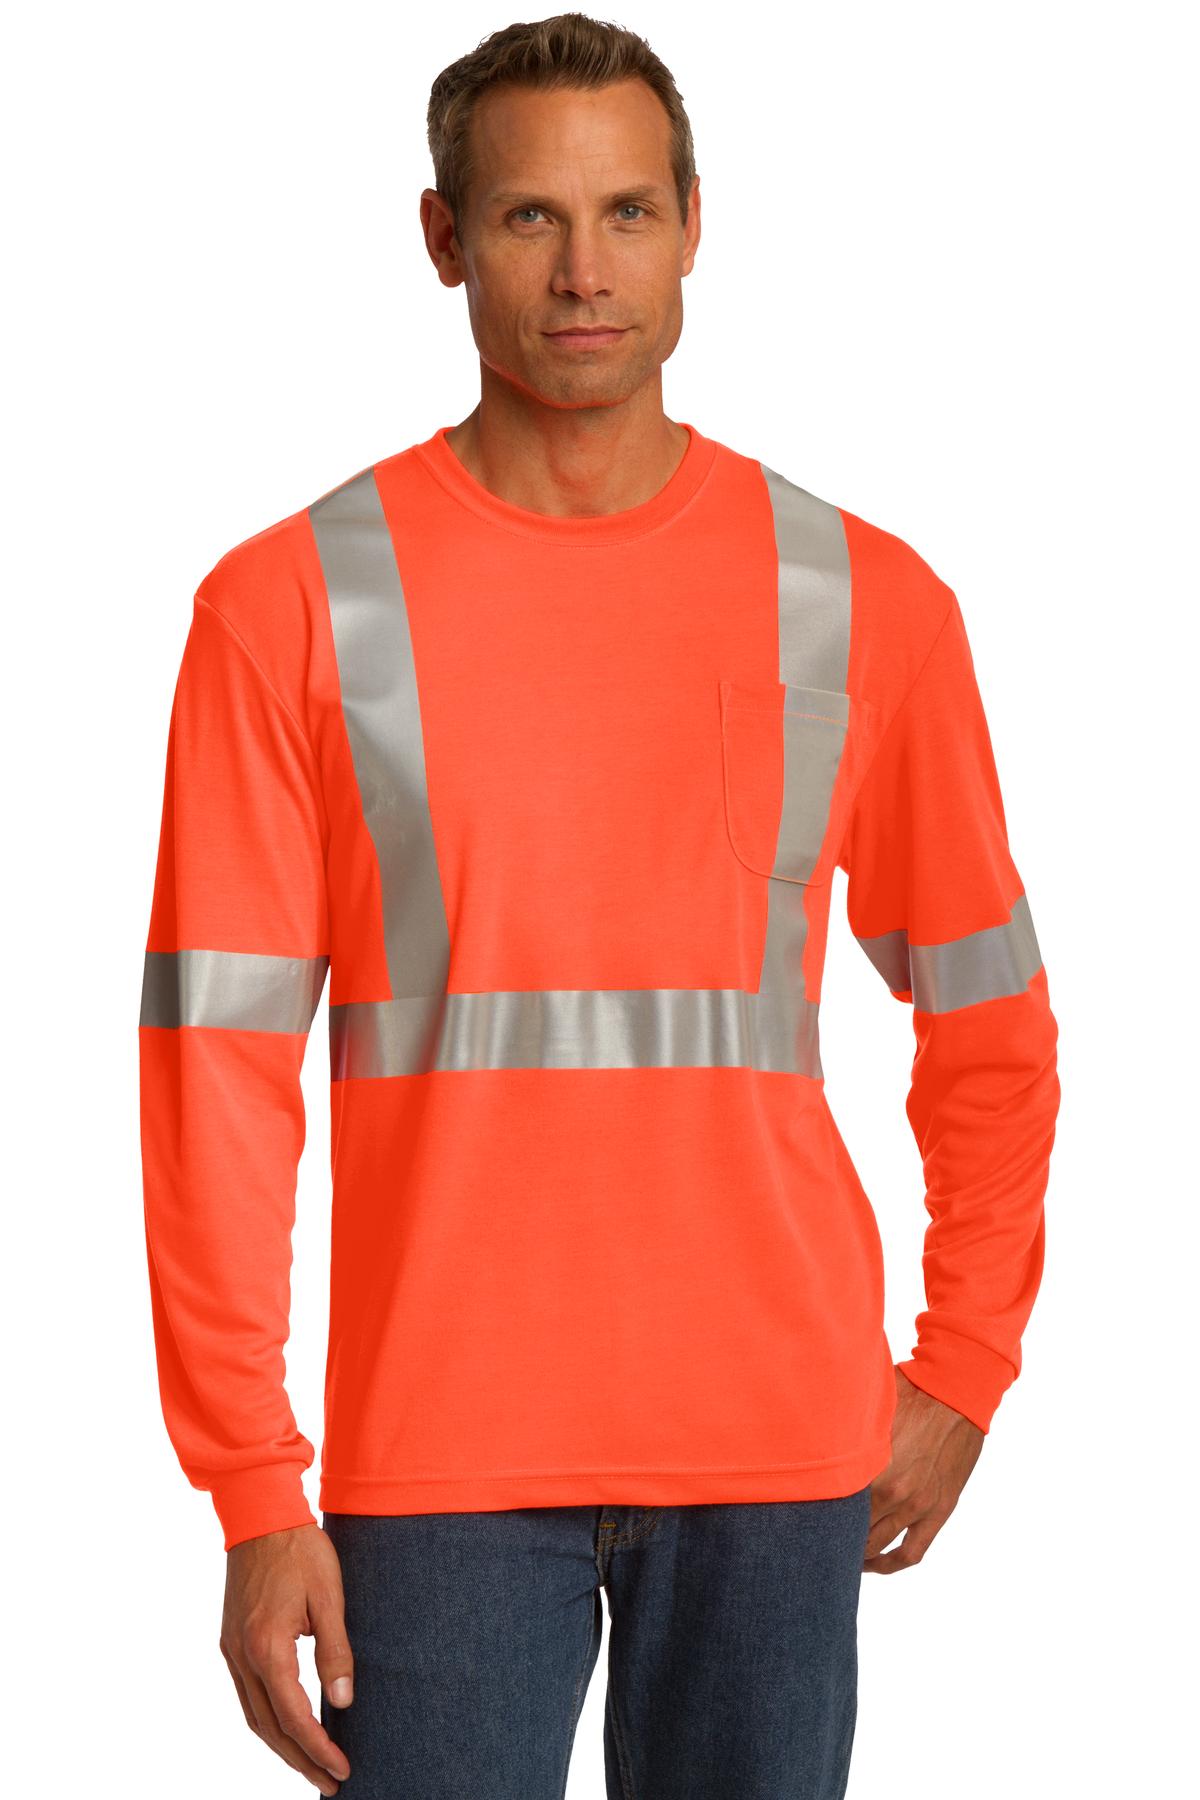 CornerStone ANSI 107 Class 2 Long Sleeve Safety T-Shirt....